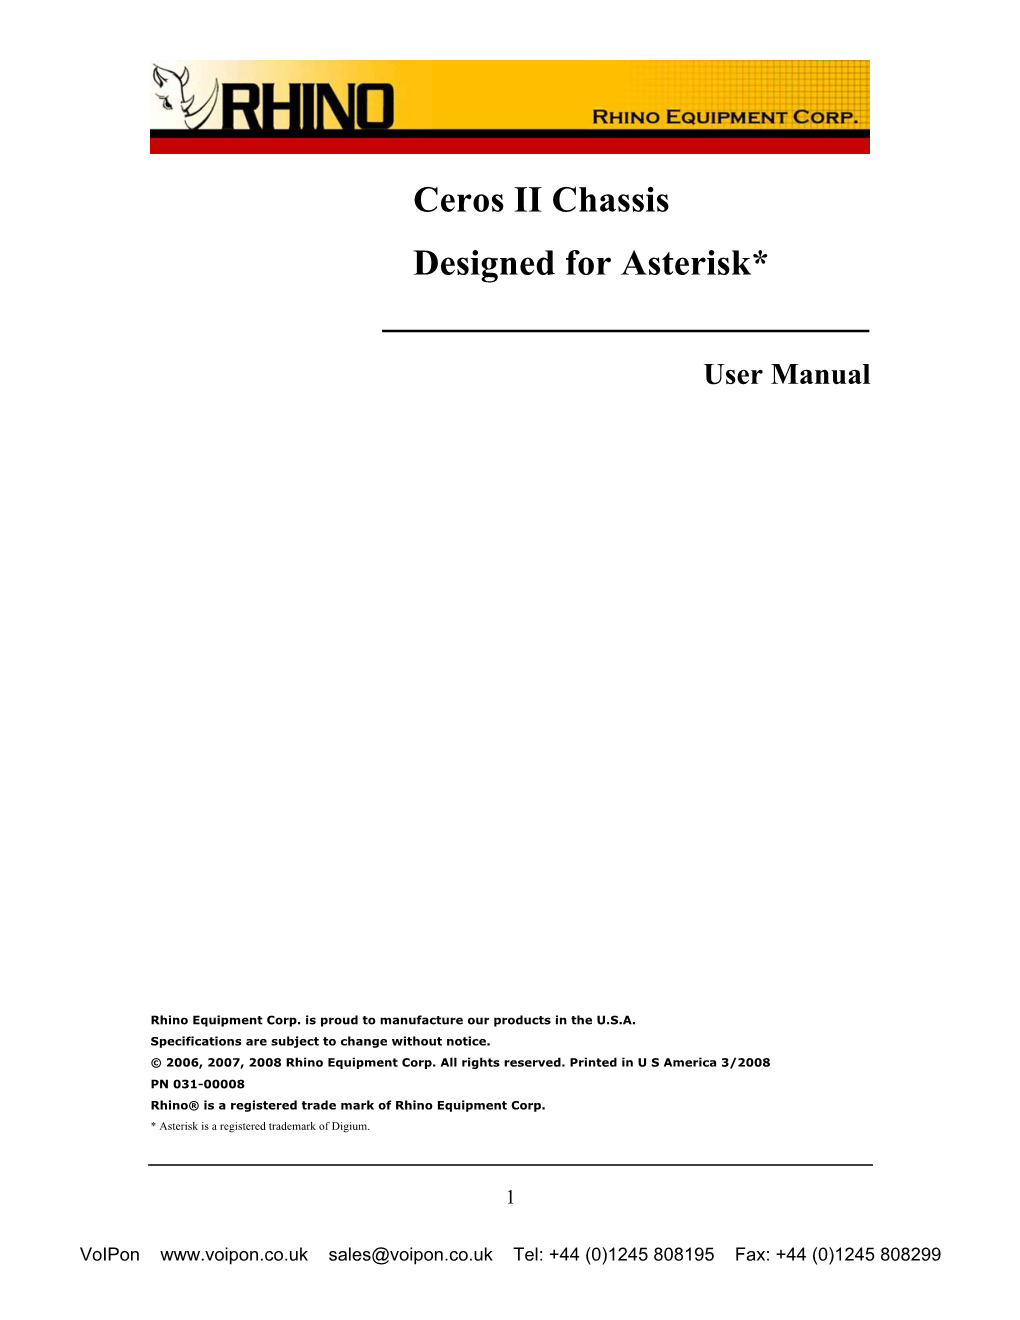 Rhino CEROS II Manual 1.00